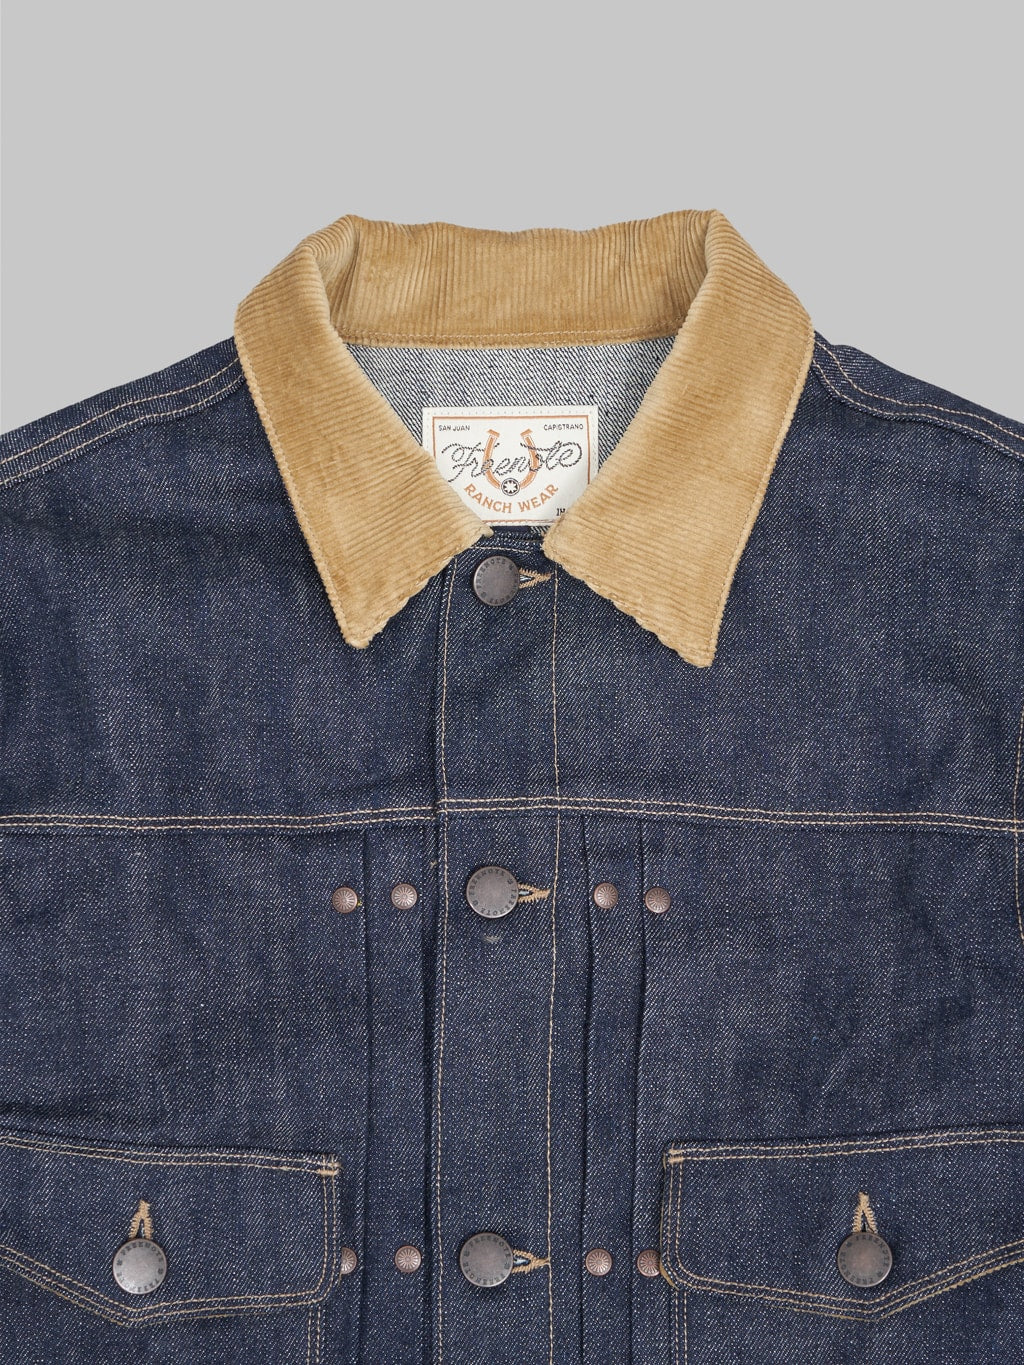 freenote cloth rj 313 ounce indigo selvedge denim jacket  collar detail